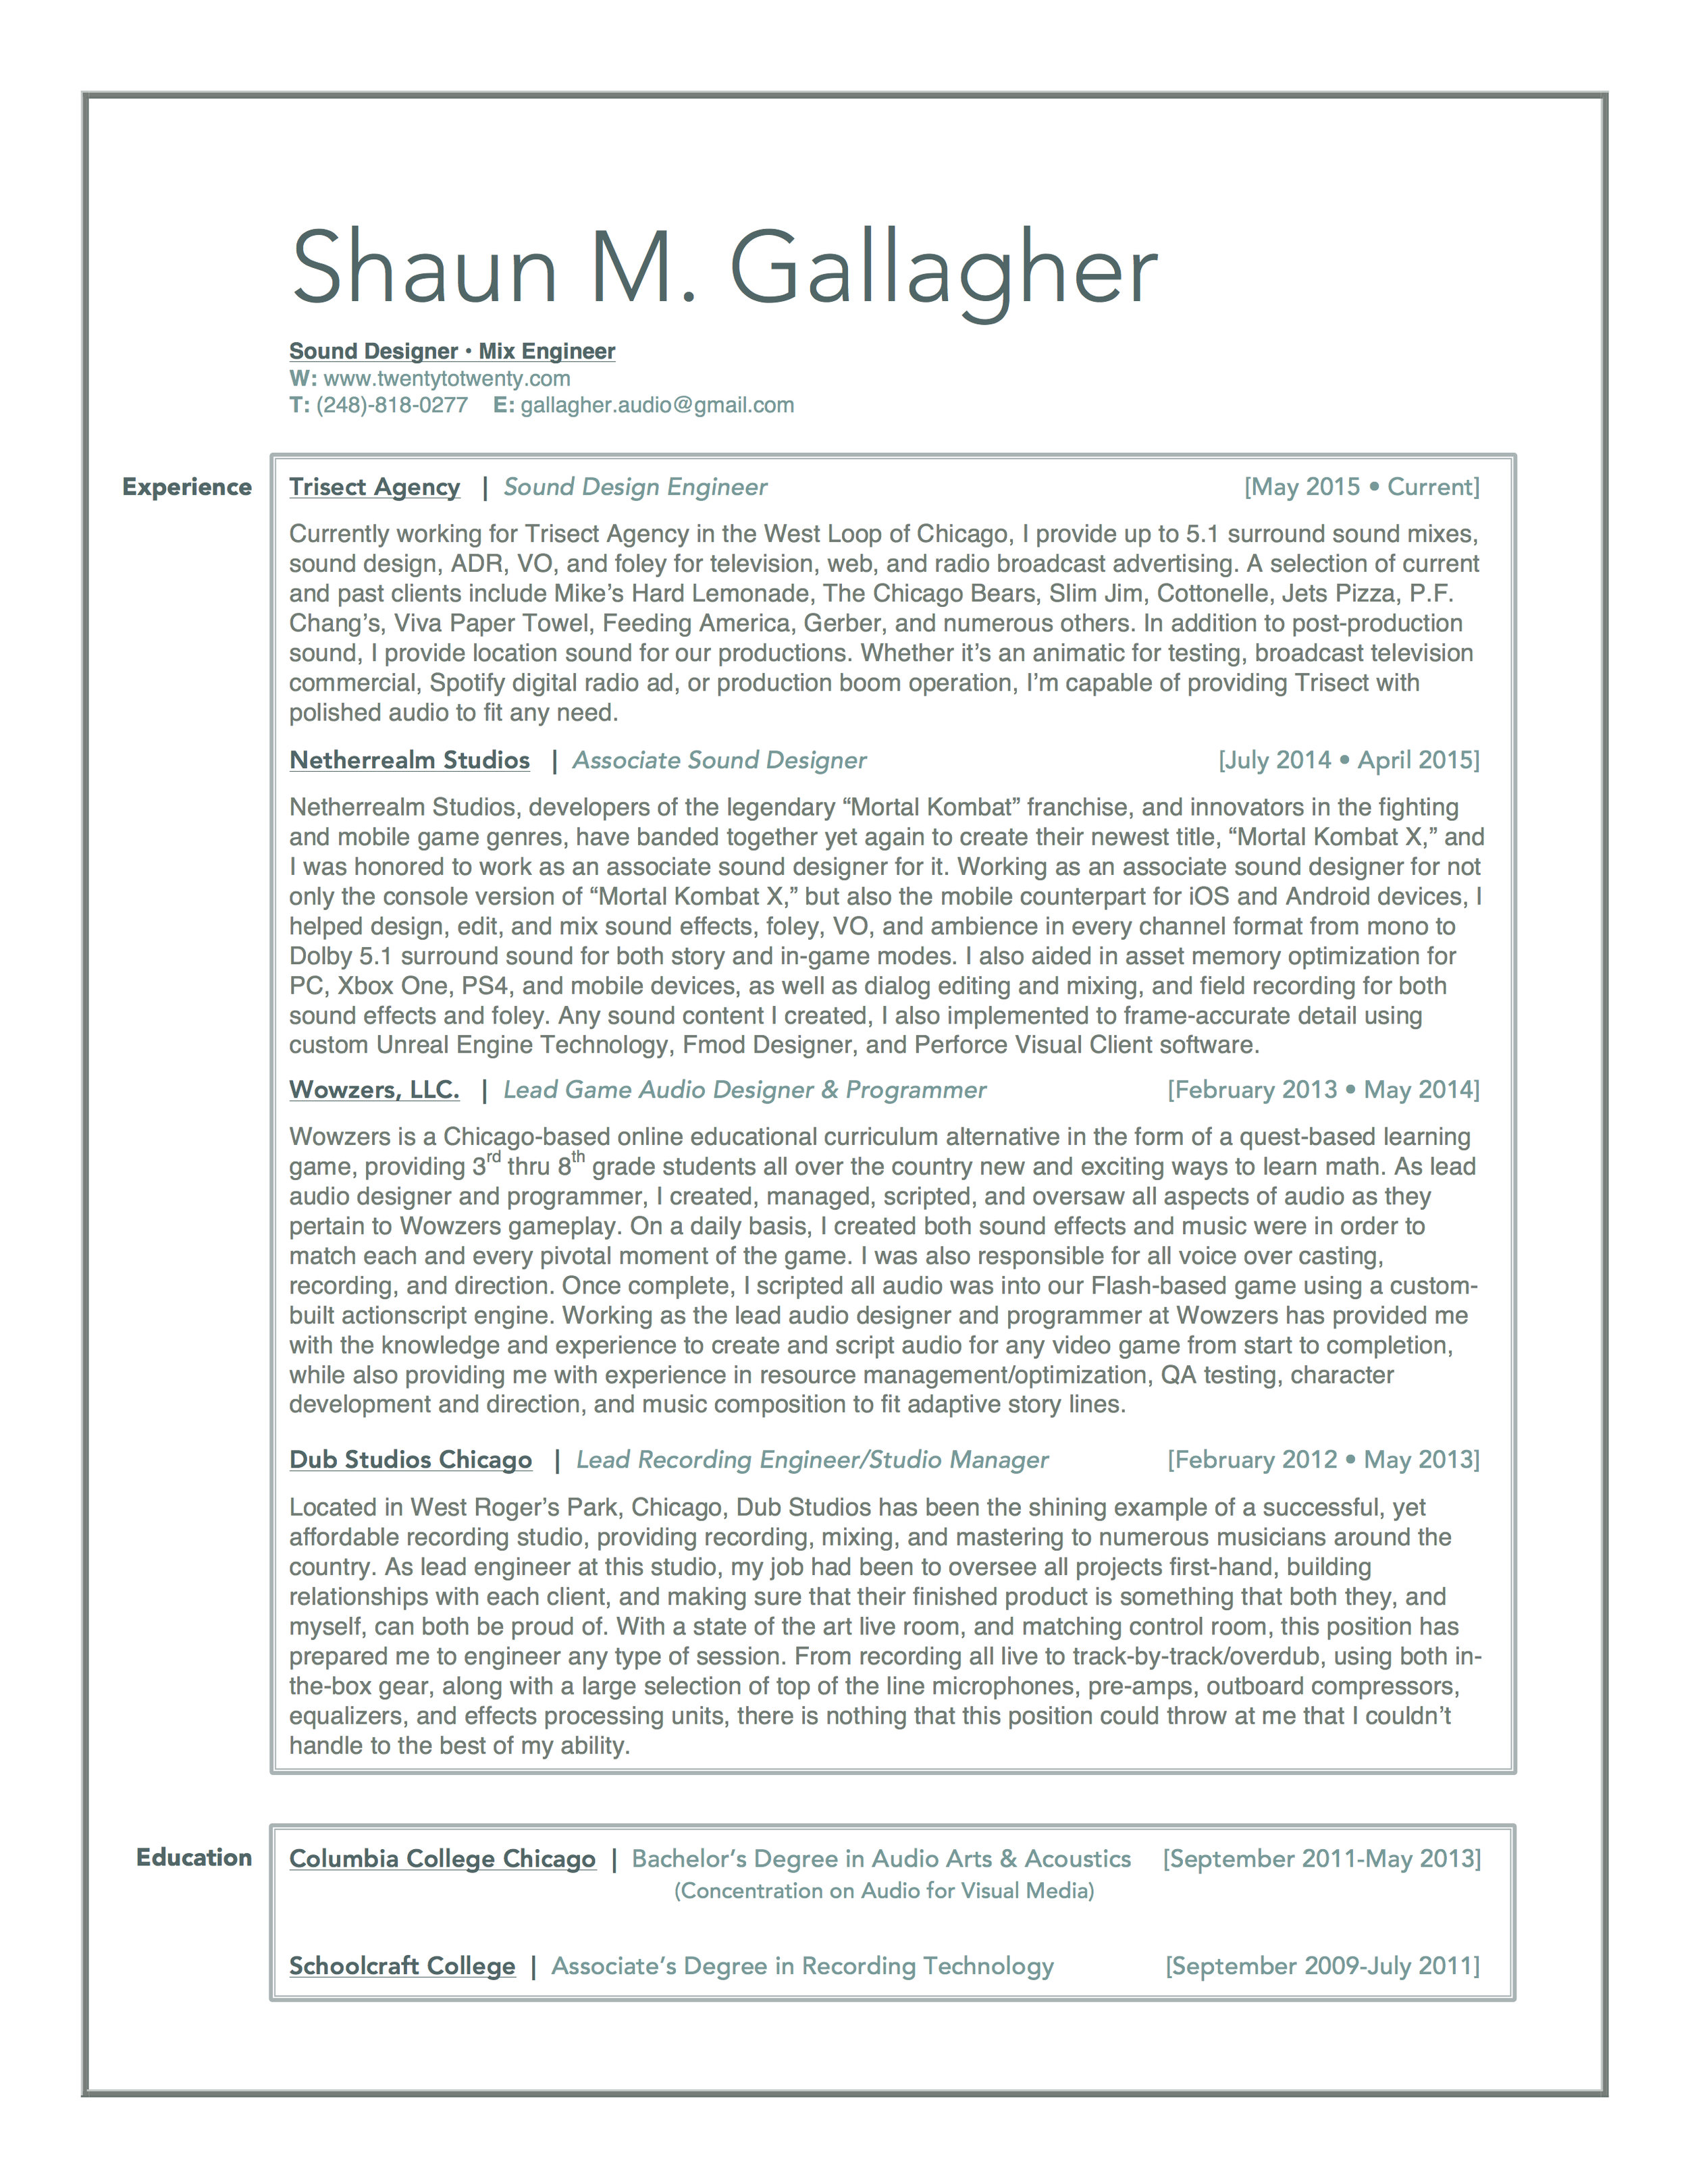 Shaun_Gallagher_Resume_PG01.jpg